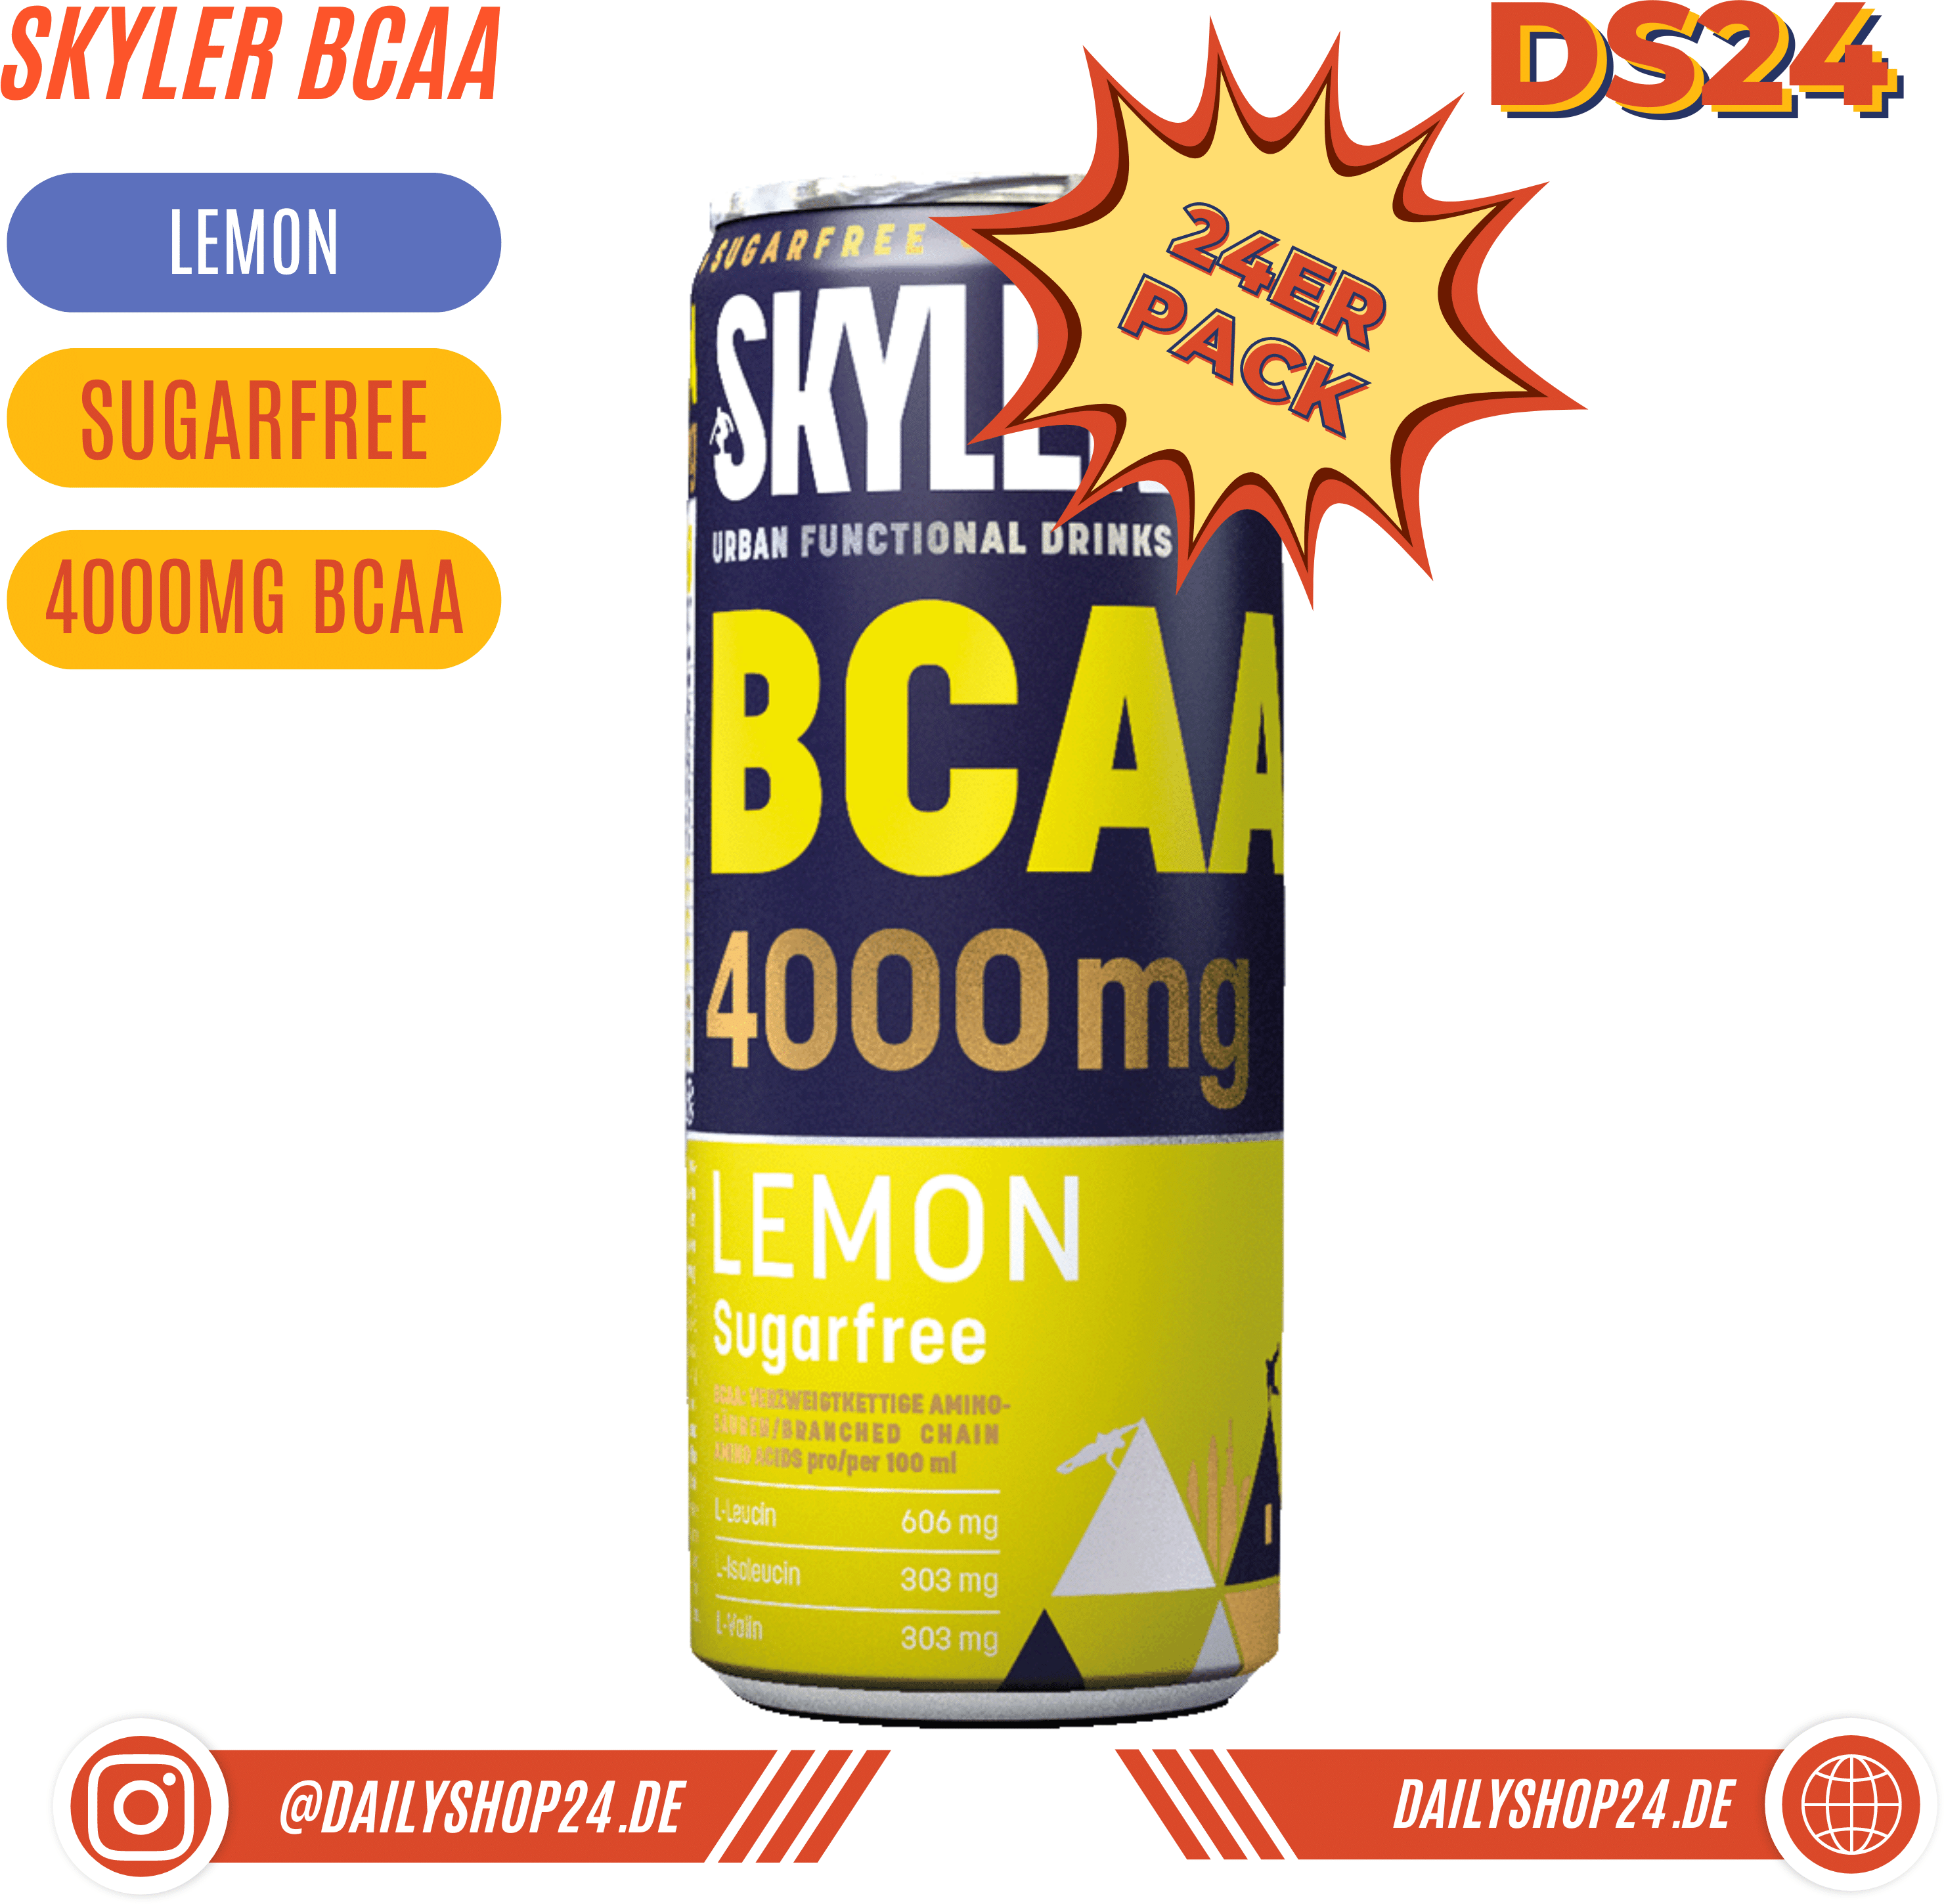 SKYLER BCAA Drink 330ml (zzgl. Pfand) - 24 Dosen / Lemon